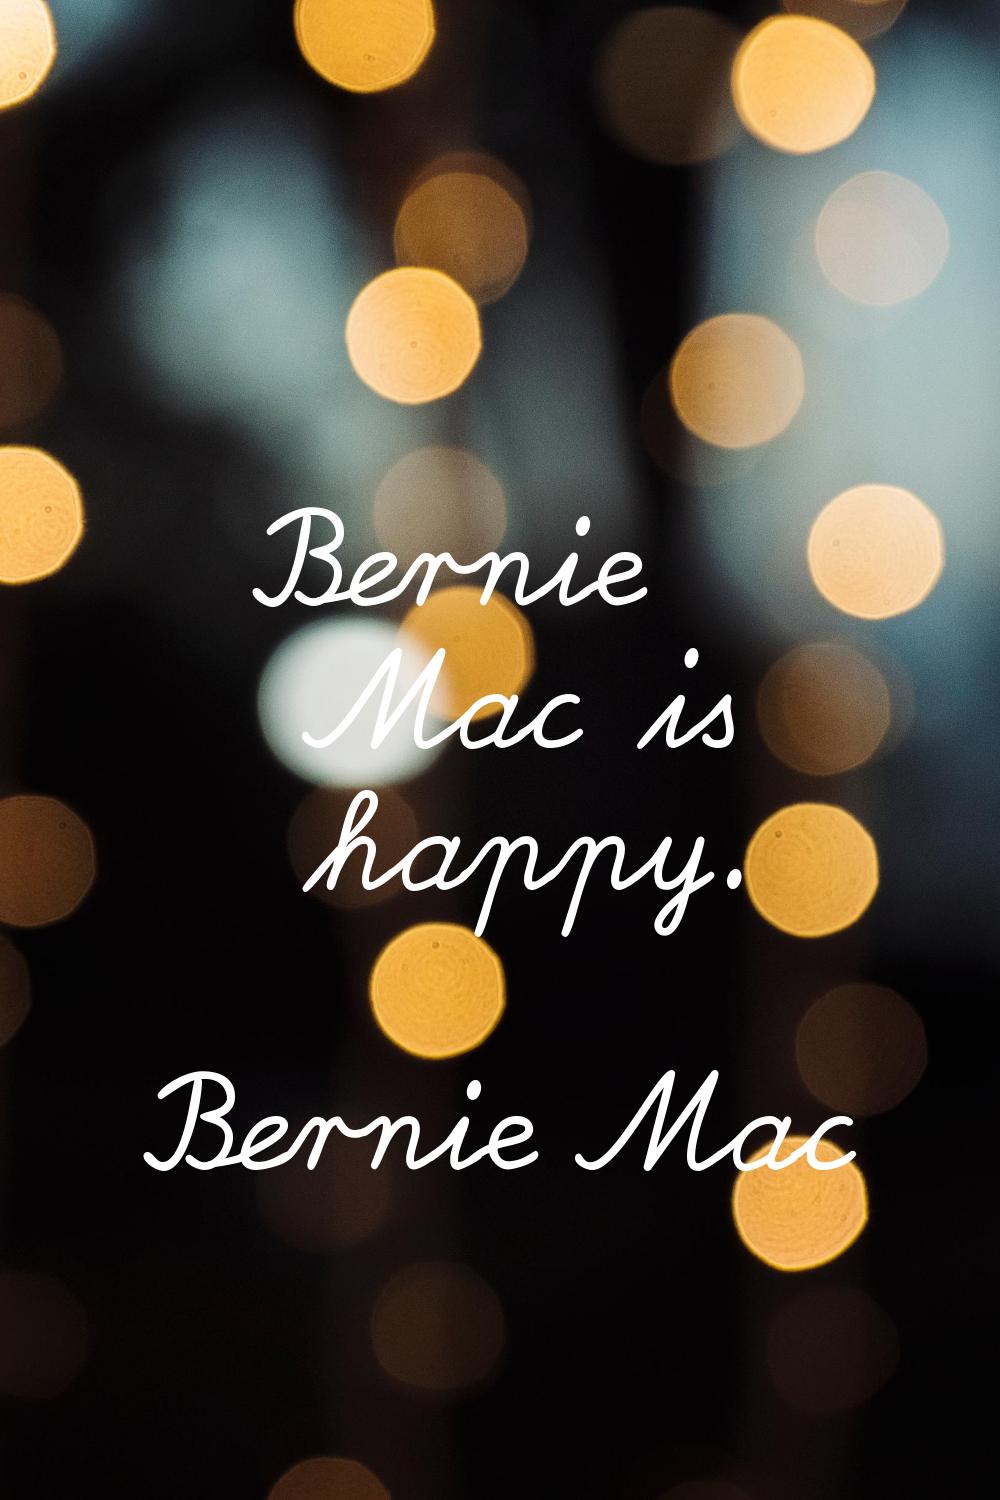 Bernie Mac is happy.